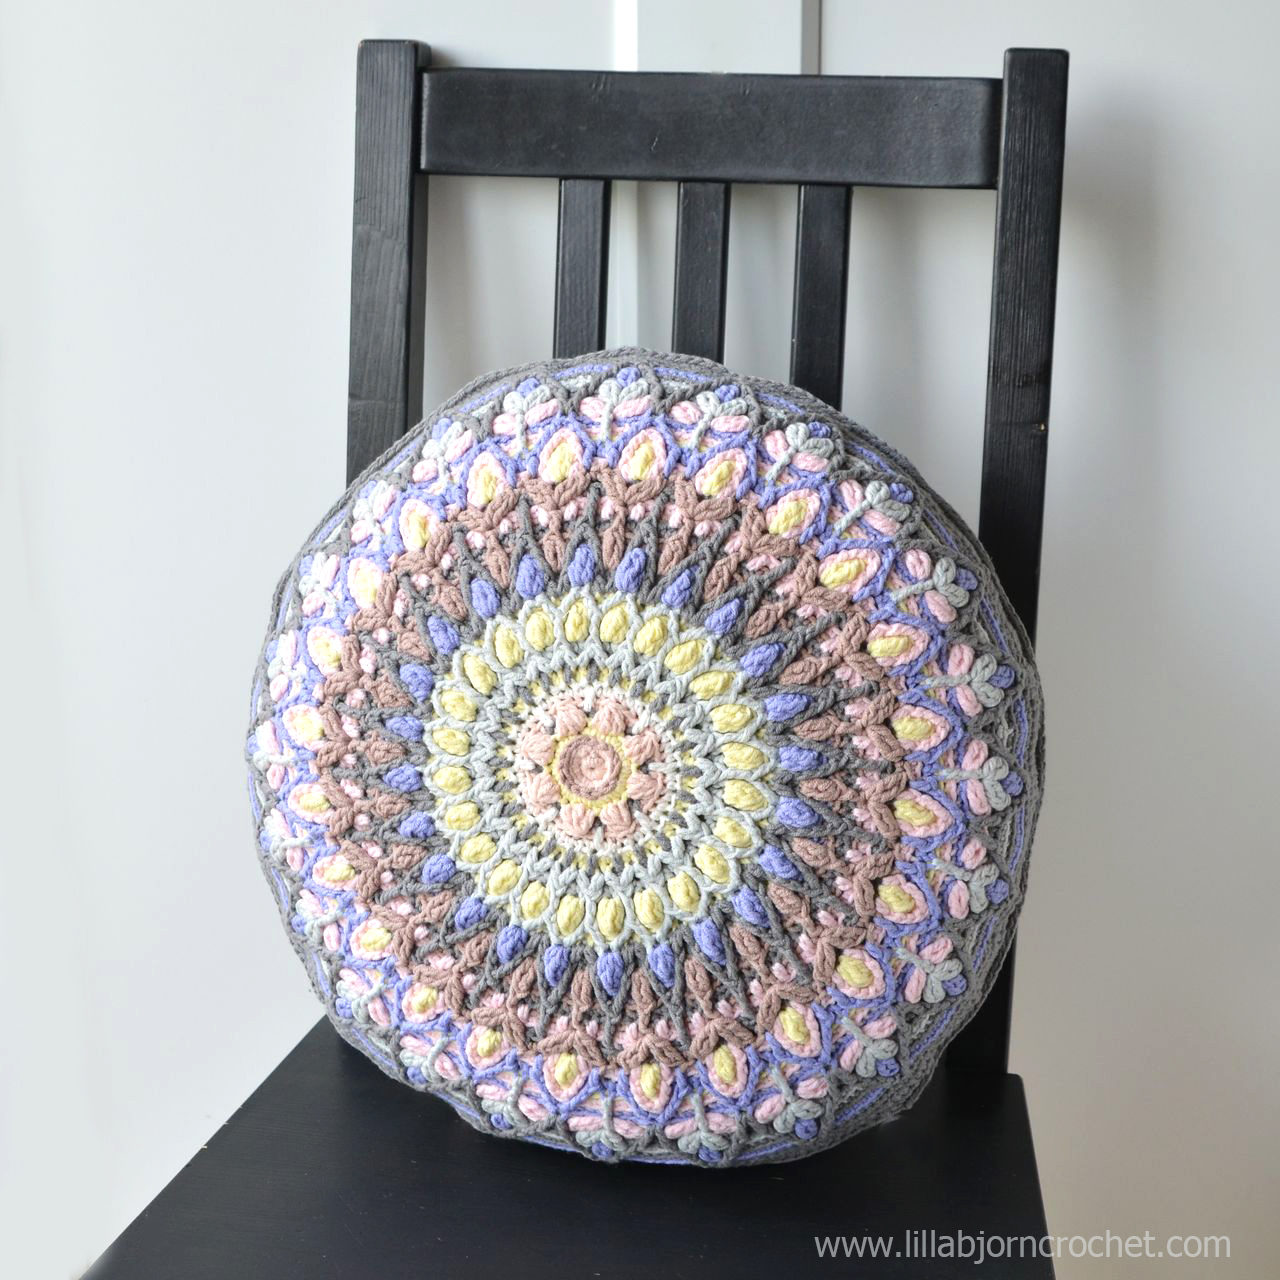 Spanish Mandala cushion - pattern by Lilla Bjorn Crochet